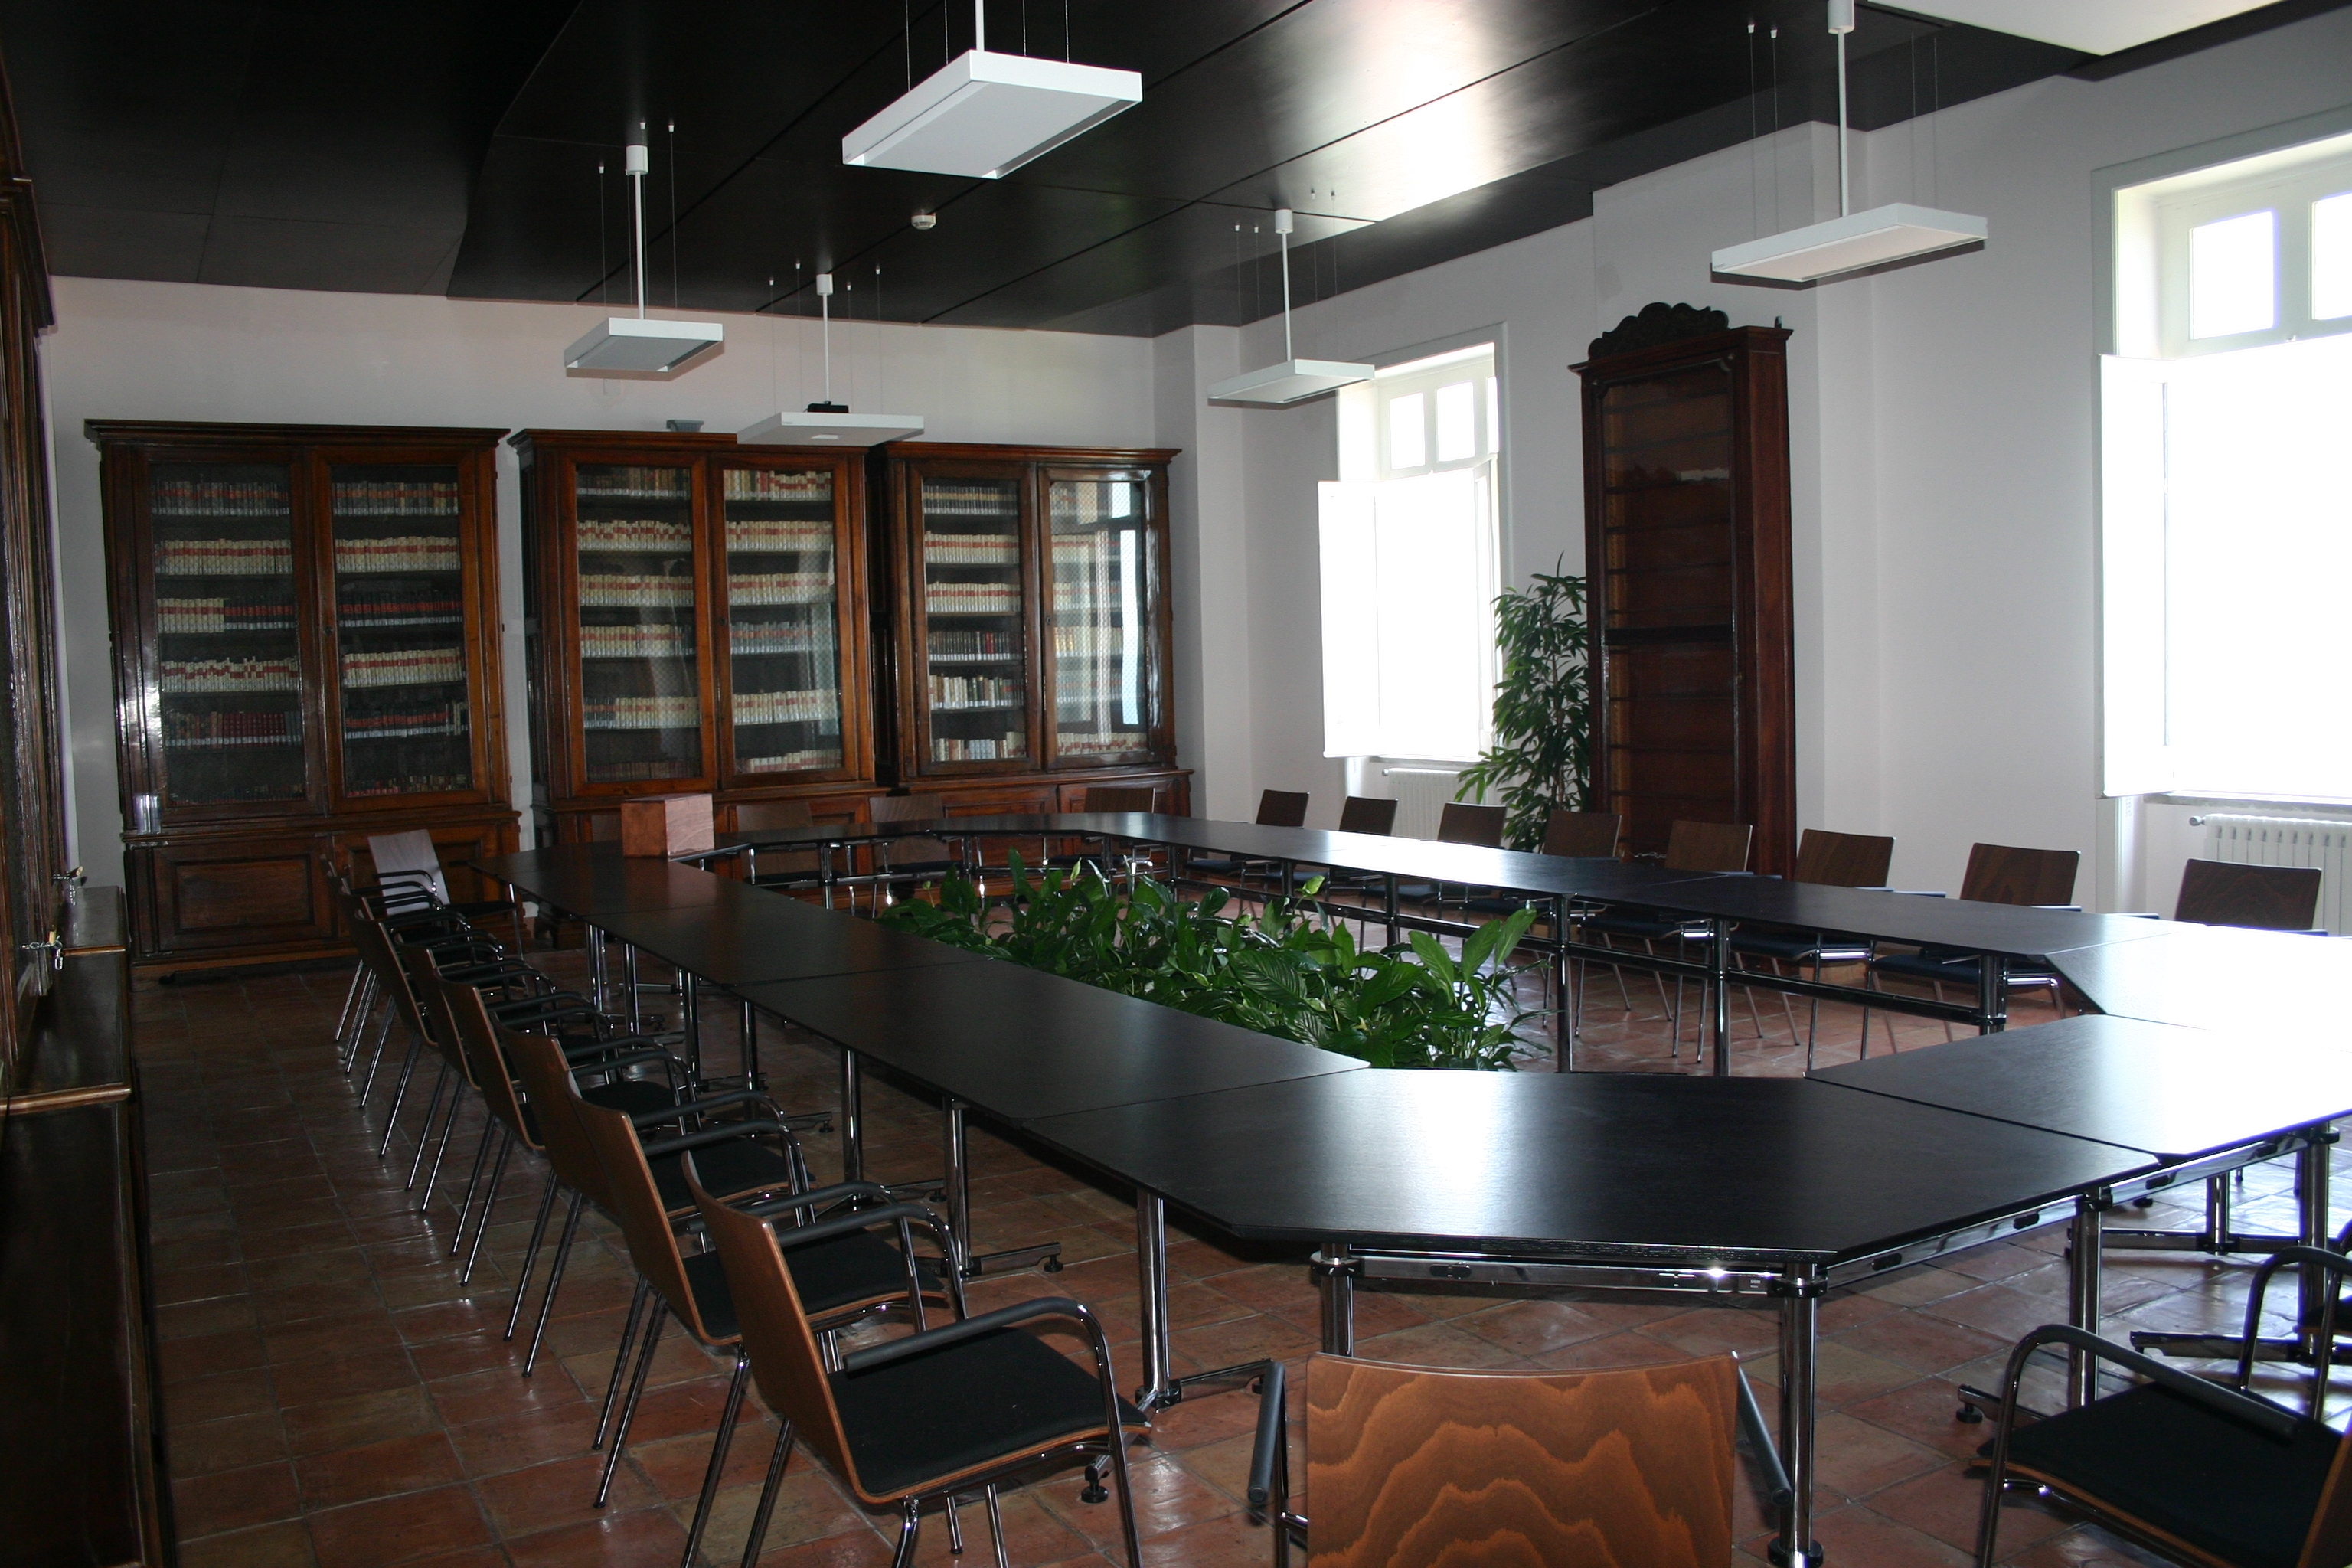 IT-NA0696 - Napoli - Biblioteca Storica Benincasa - 2014 - Foto